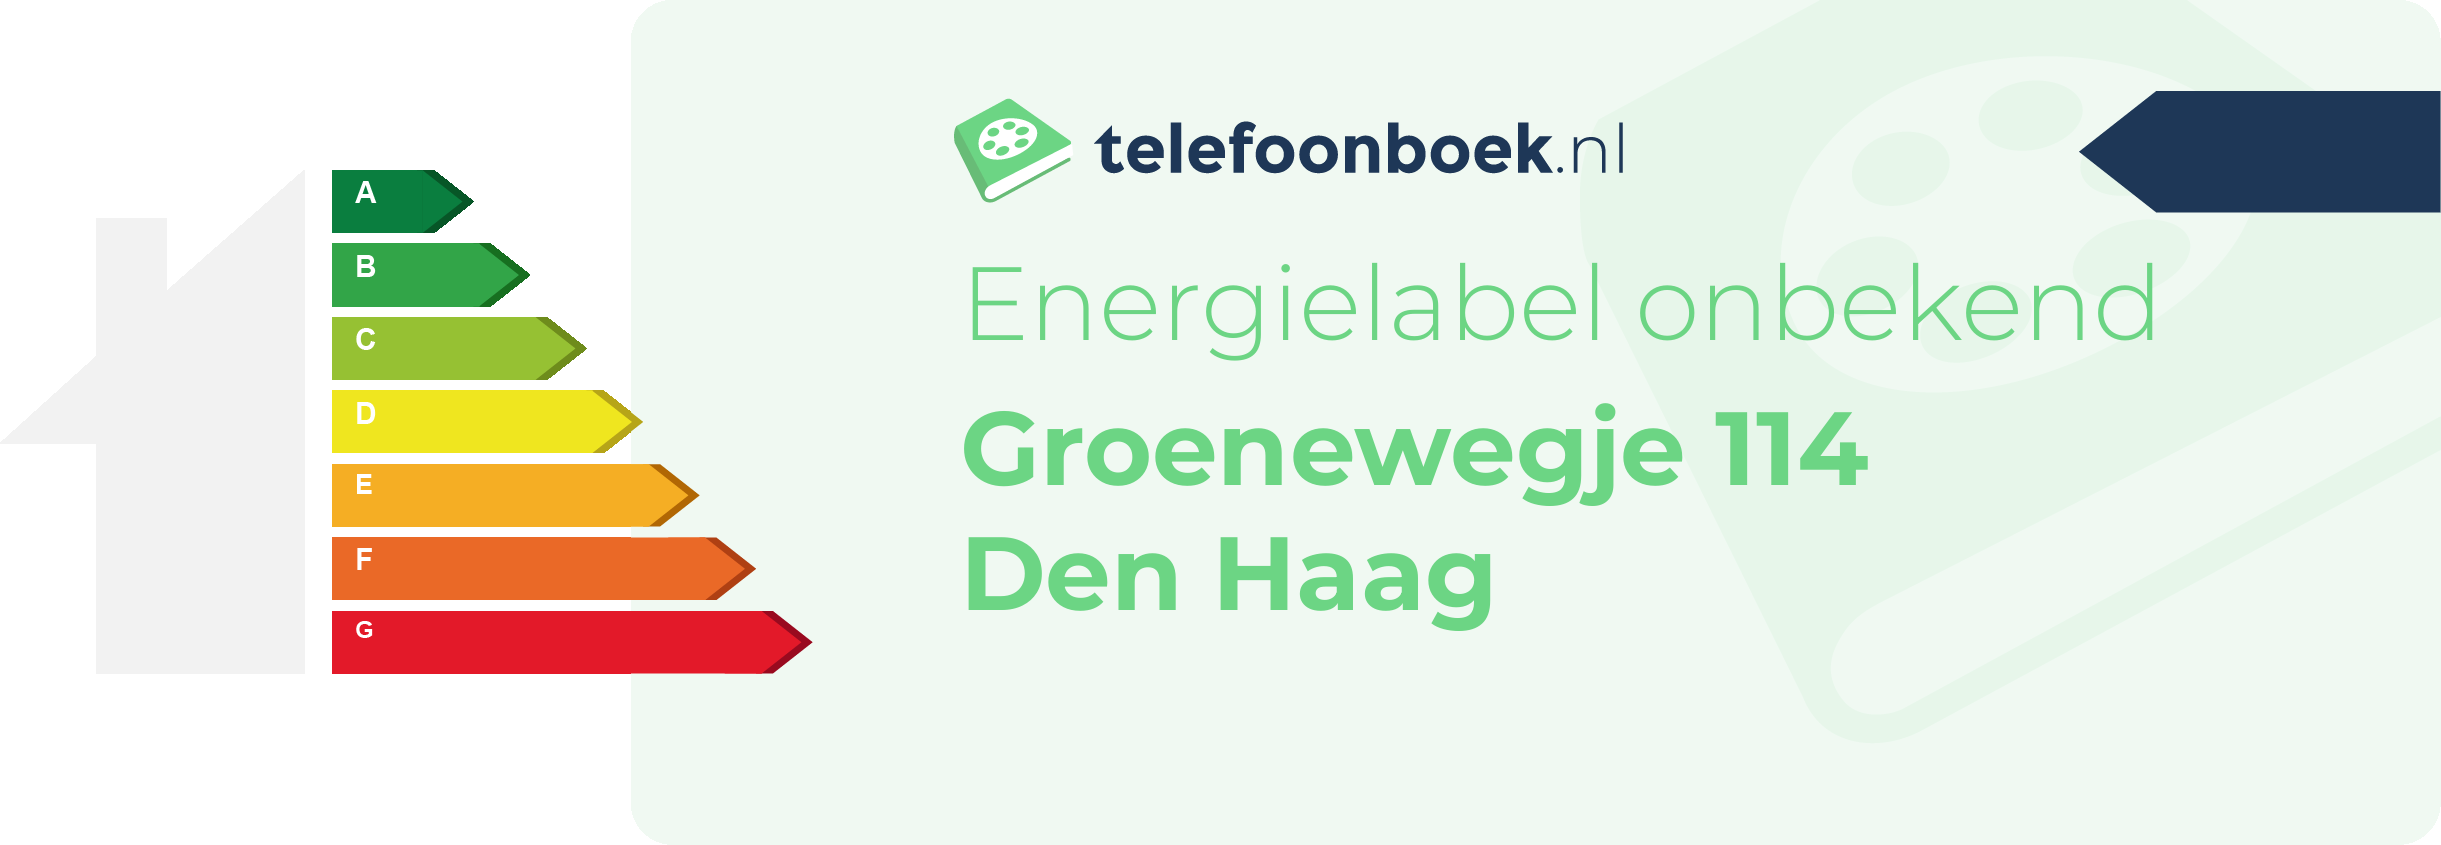 Energielabel Groenewegje 114 Den Haag